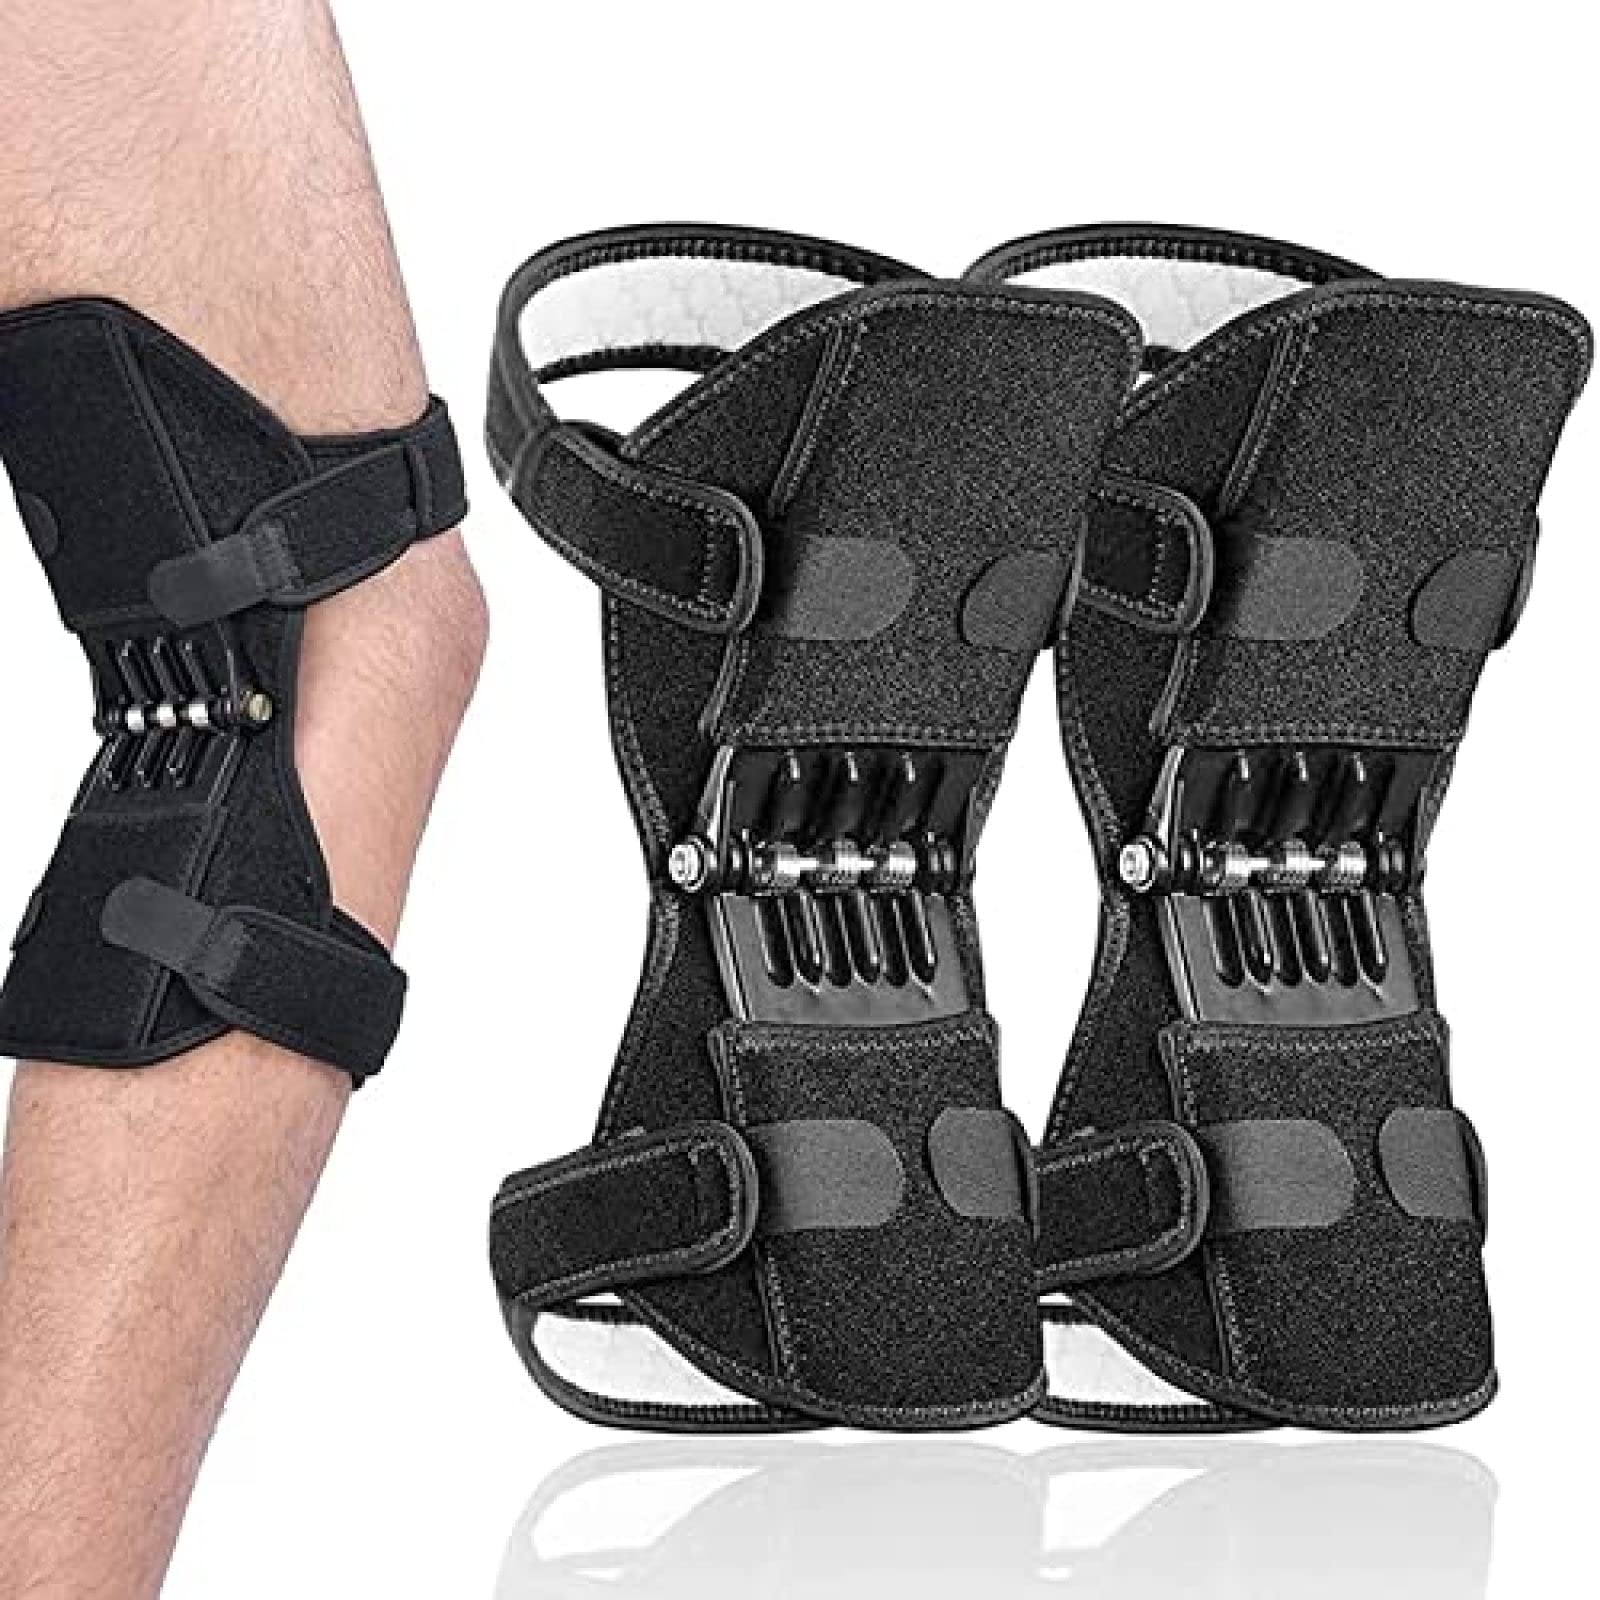 GaoGaoBei Knee Brace Power 2 Packs Knee Brace Joint Support, Power Knee Stabilizer Pads, Protective Gear Booster with Powerful Springs for Men/Women Weak Legs,Super, Einheitsgröße